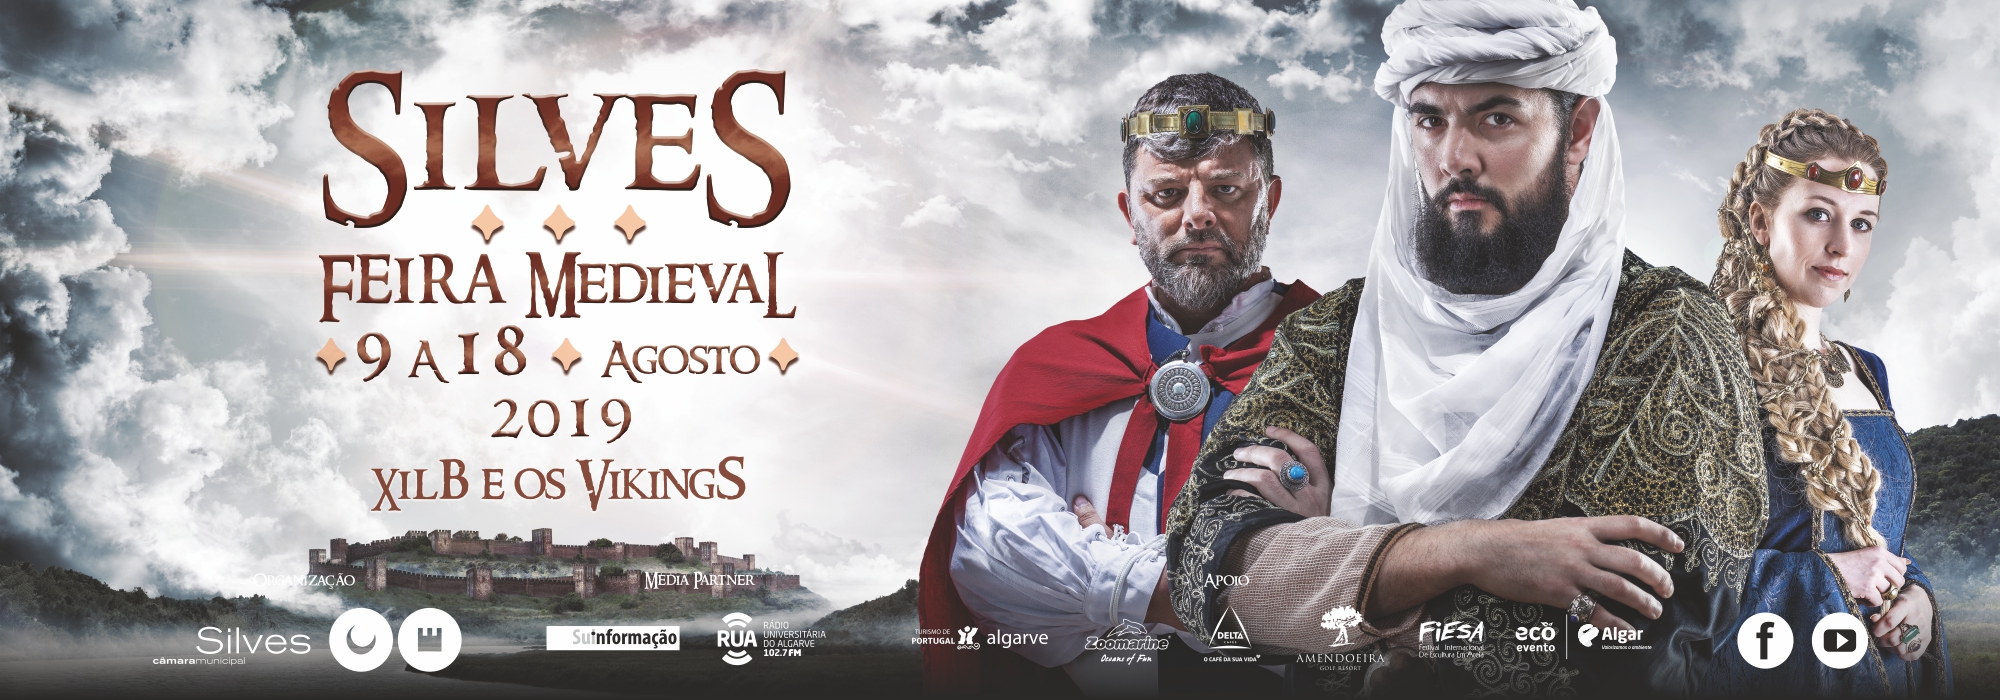 Muçulmanos e Vikings invadem a cidade de Silves